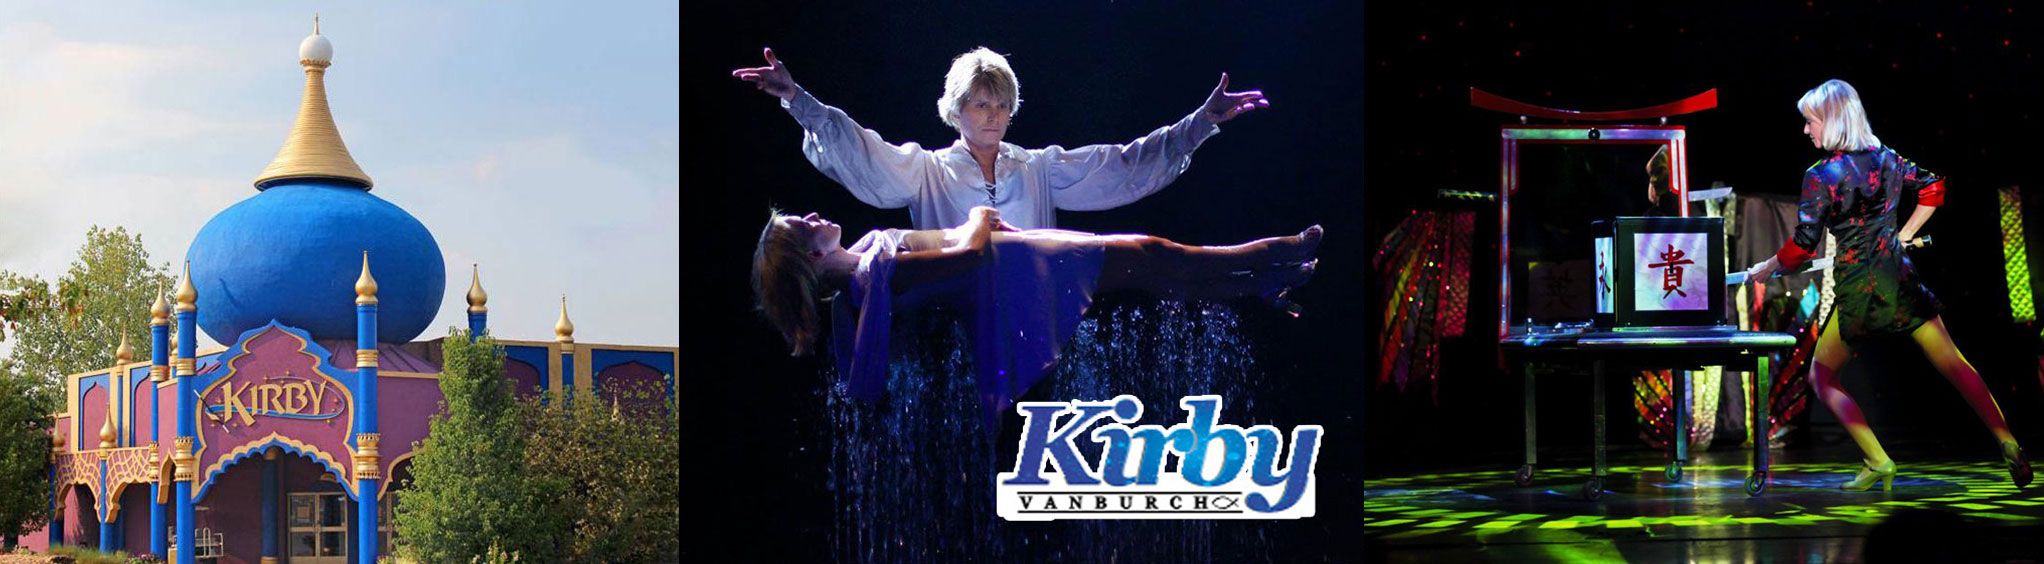 Kirby Van Burch Theater